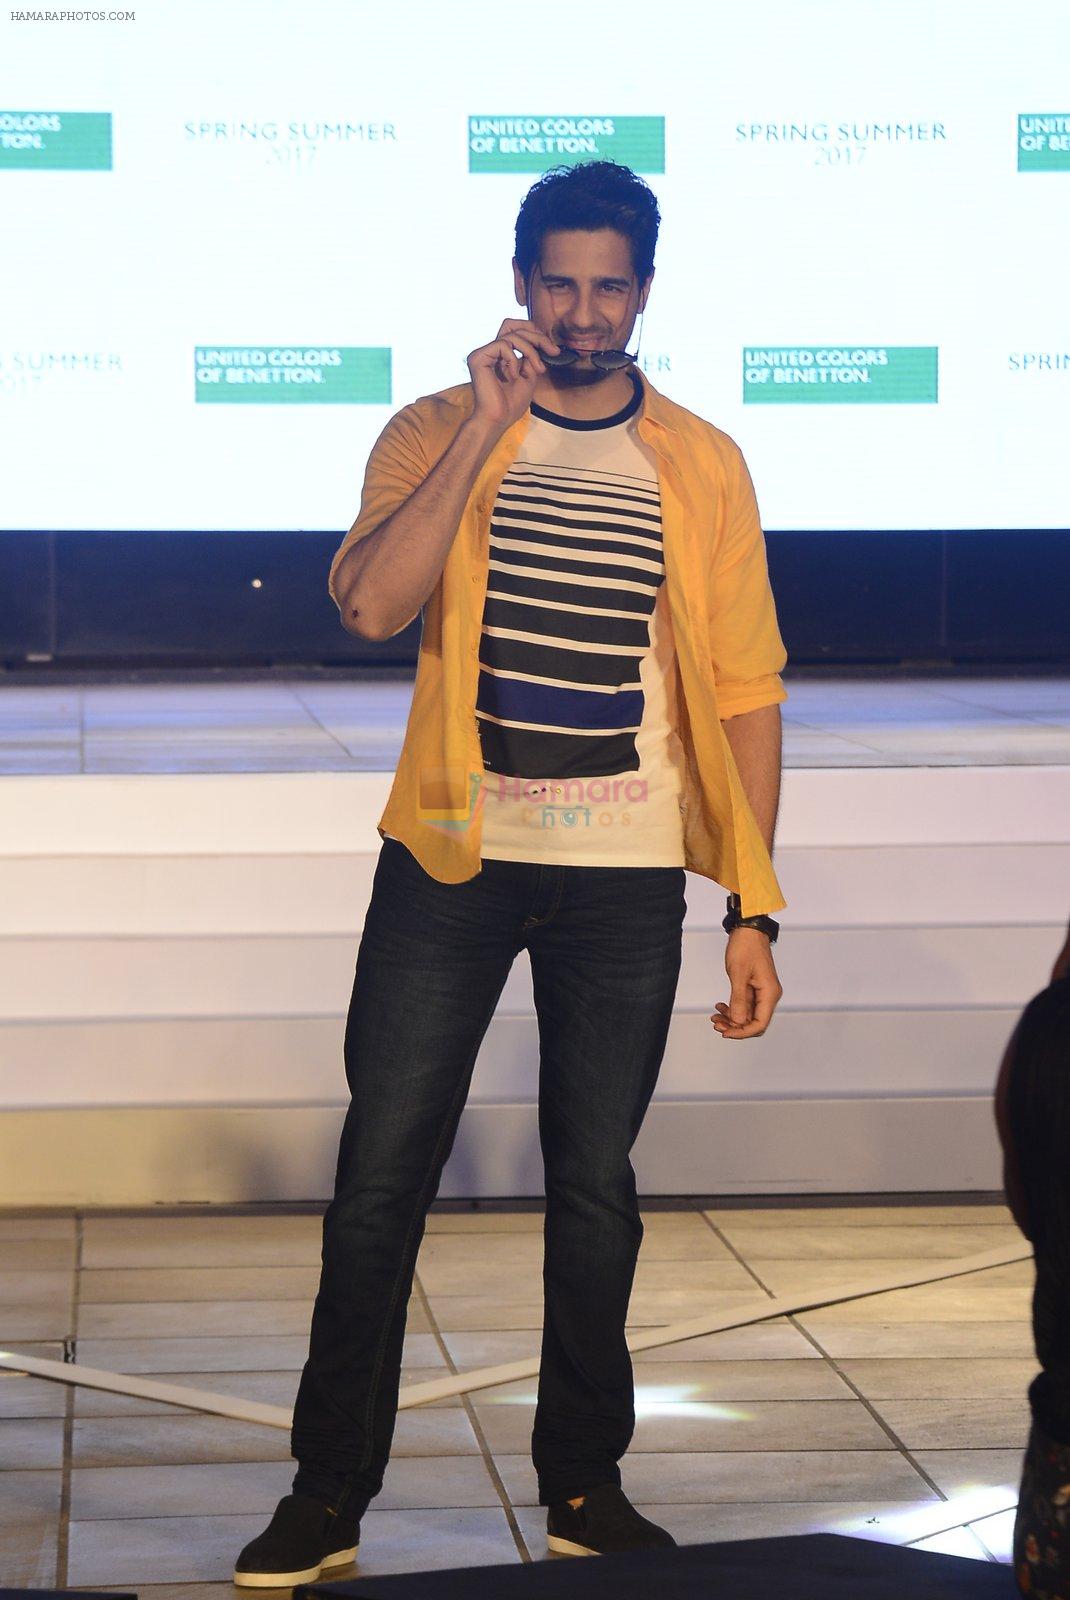 Sidharth Malhotra at Benetton show on 18th Jan 2017